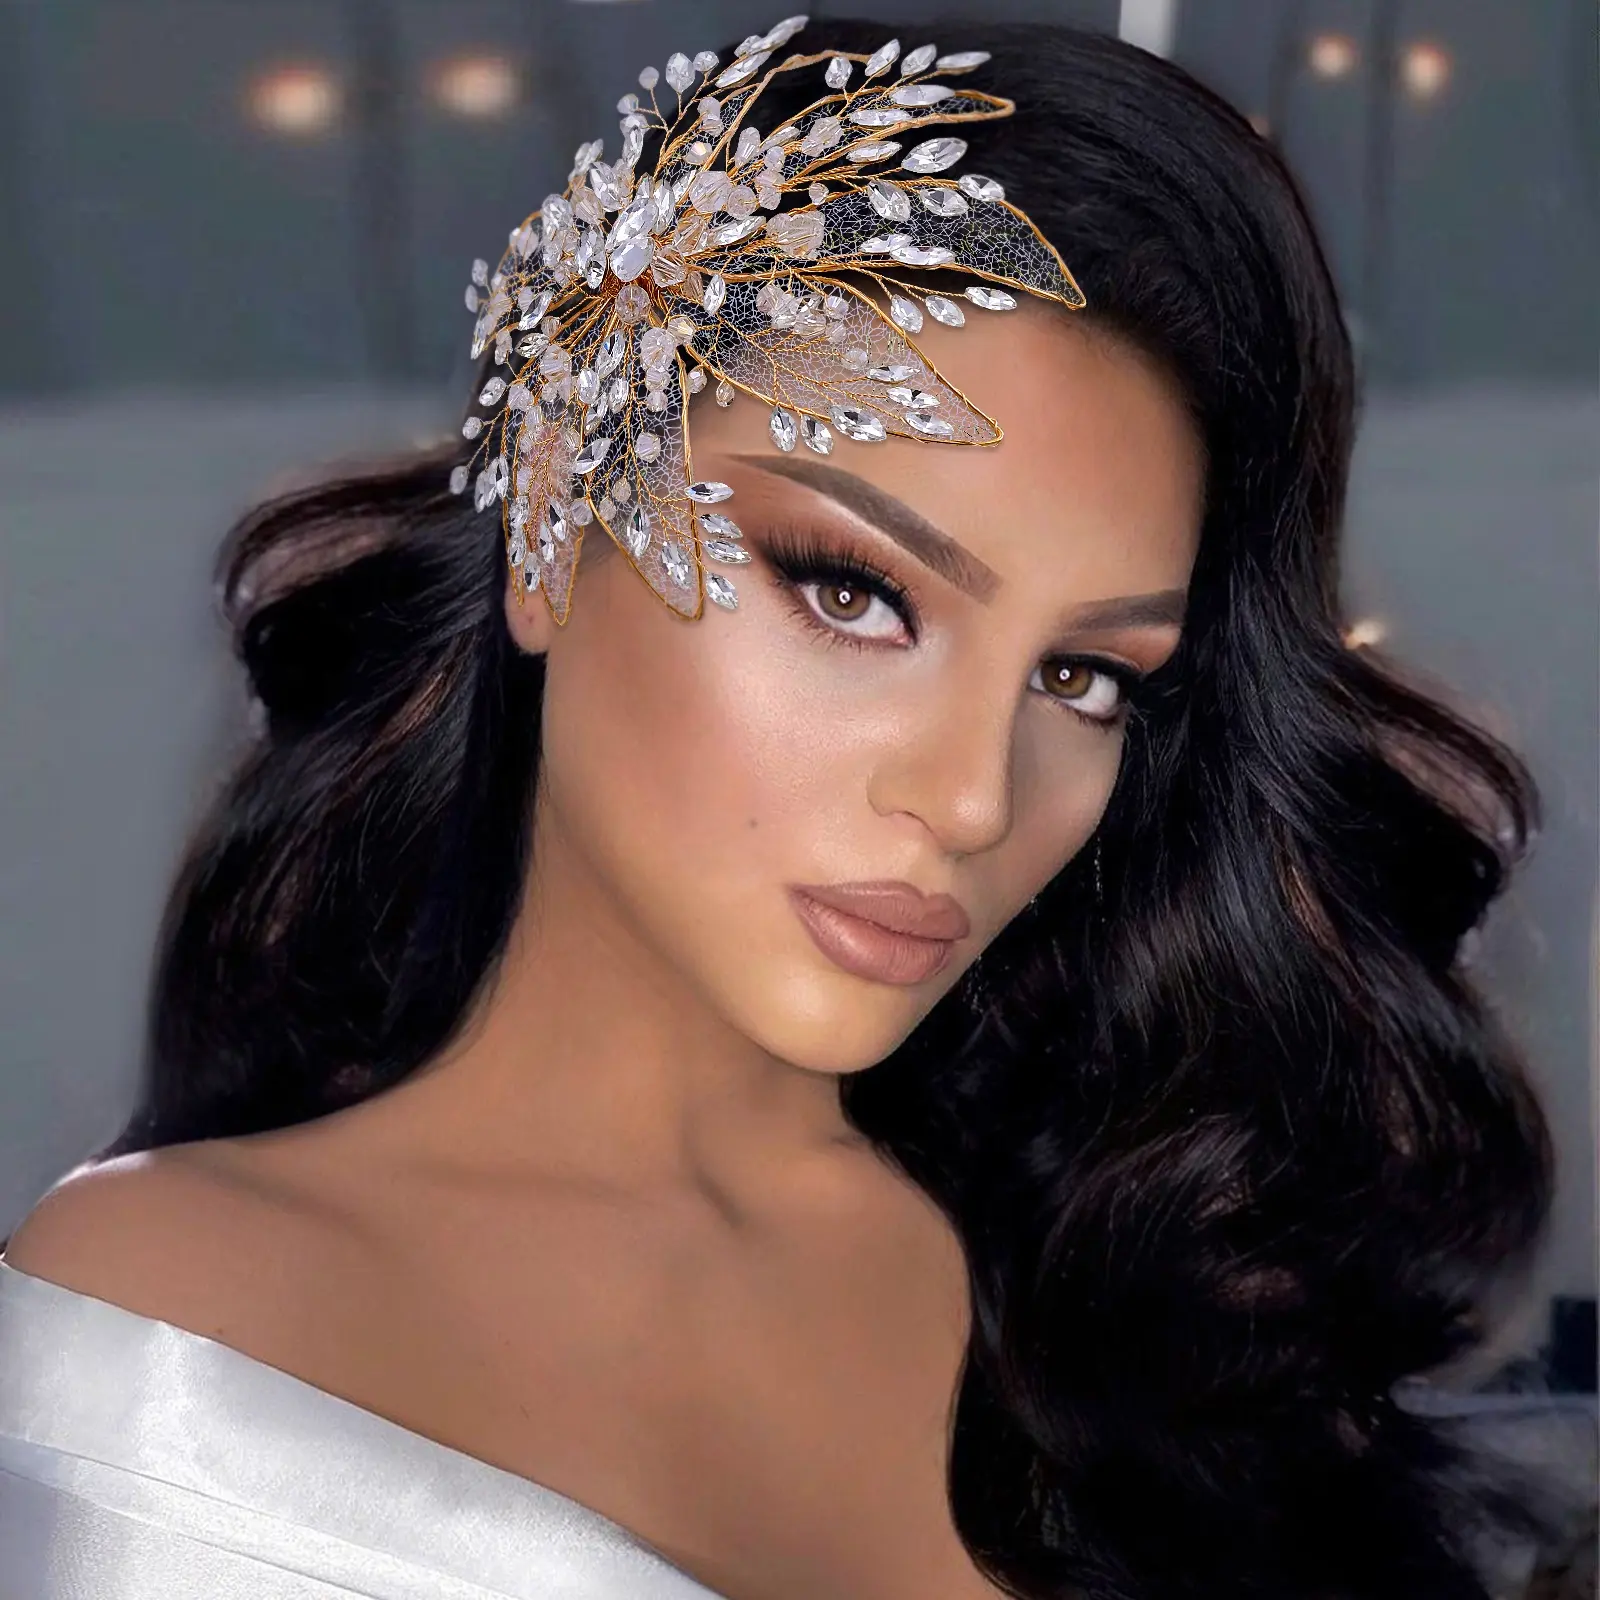 Handmade Hairpin Party Headdress Headband Headpiece Crystal Rhinestones Alloy Leaves Wedding Bridal Jewelry Headwear